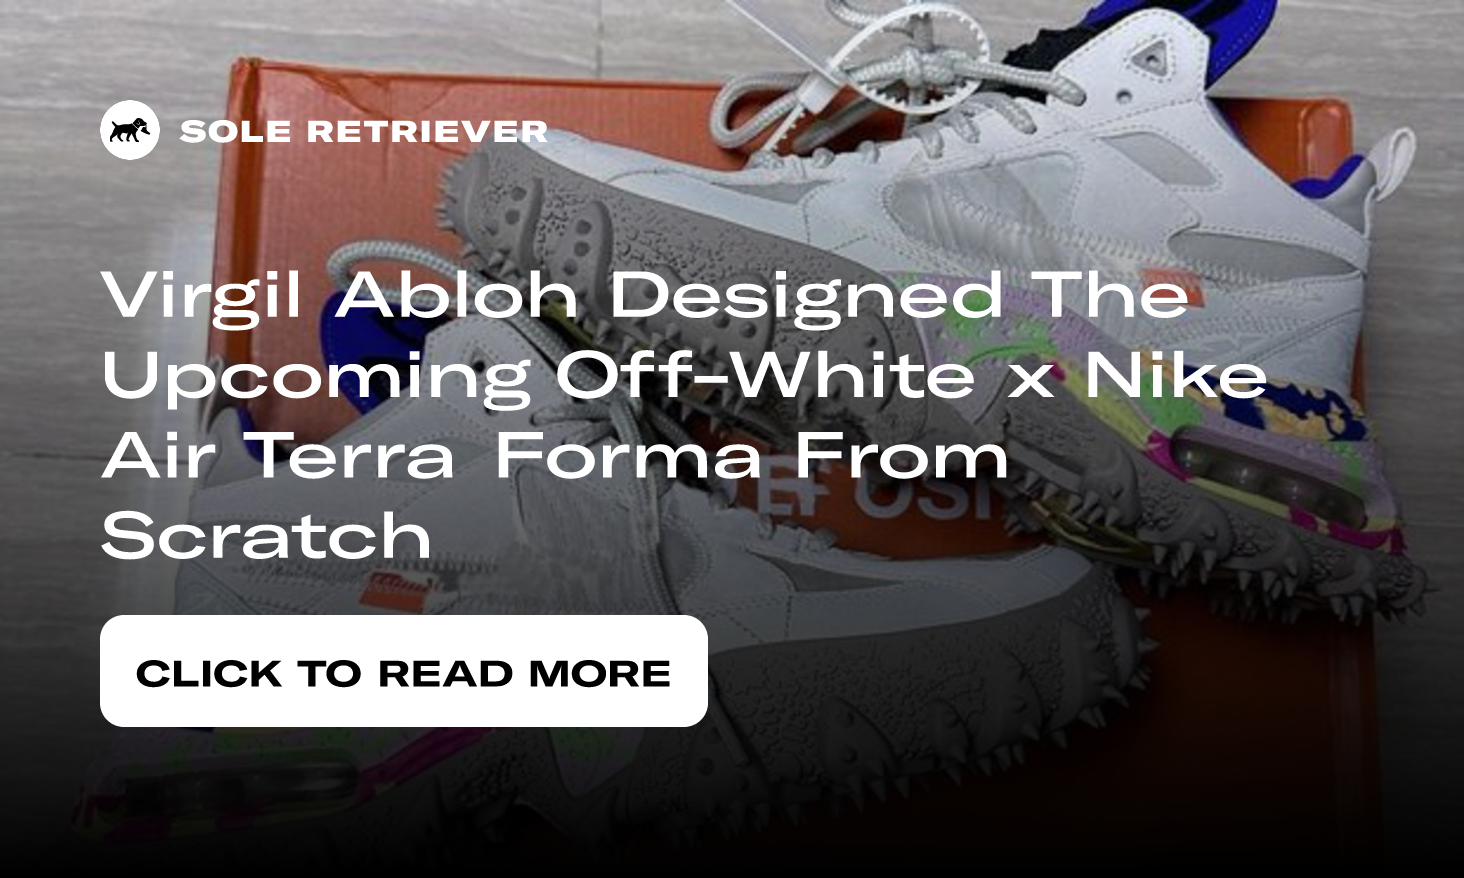 Virgil Abloh Designed The Upcoming Off-White x Nike Air Terra